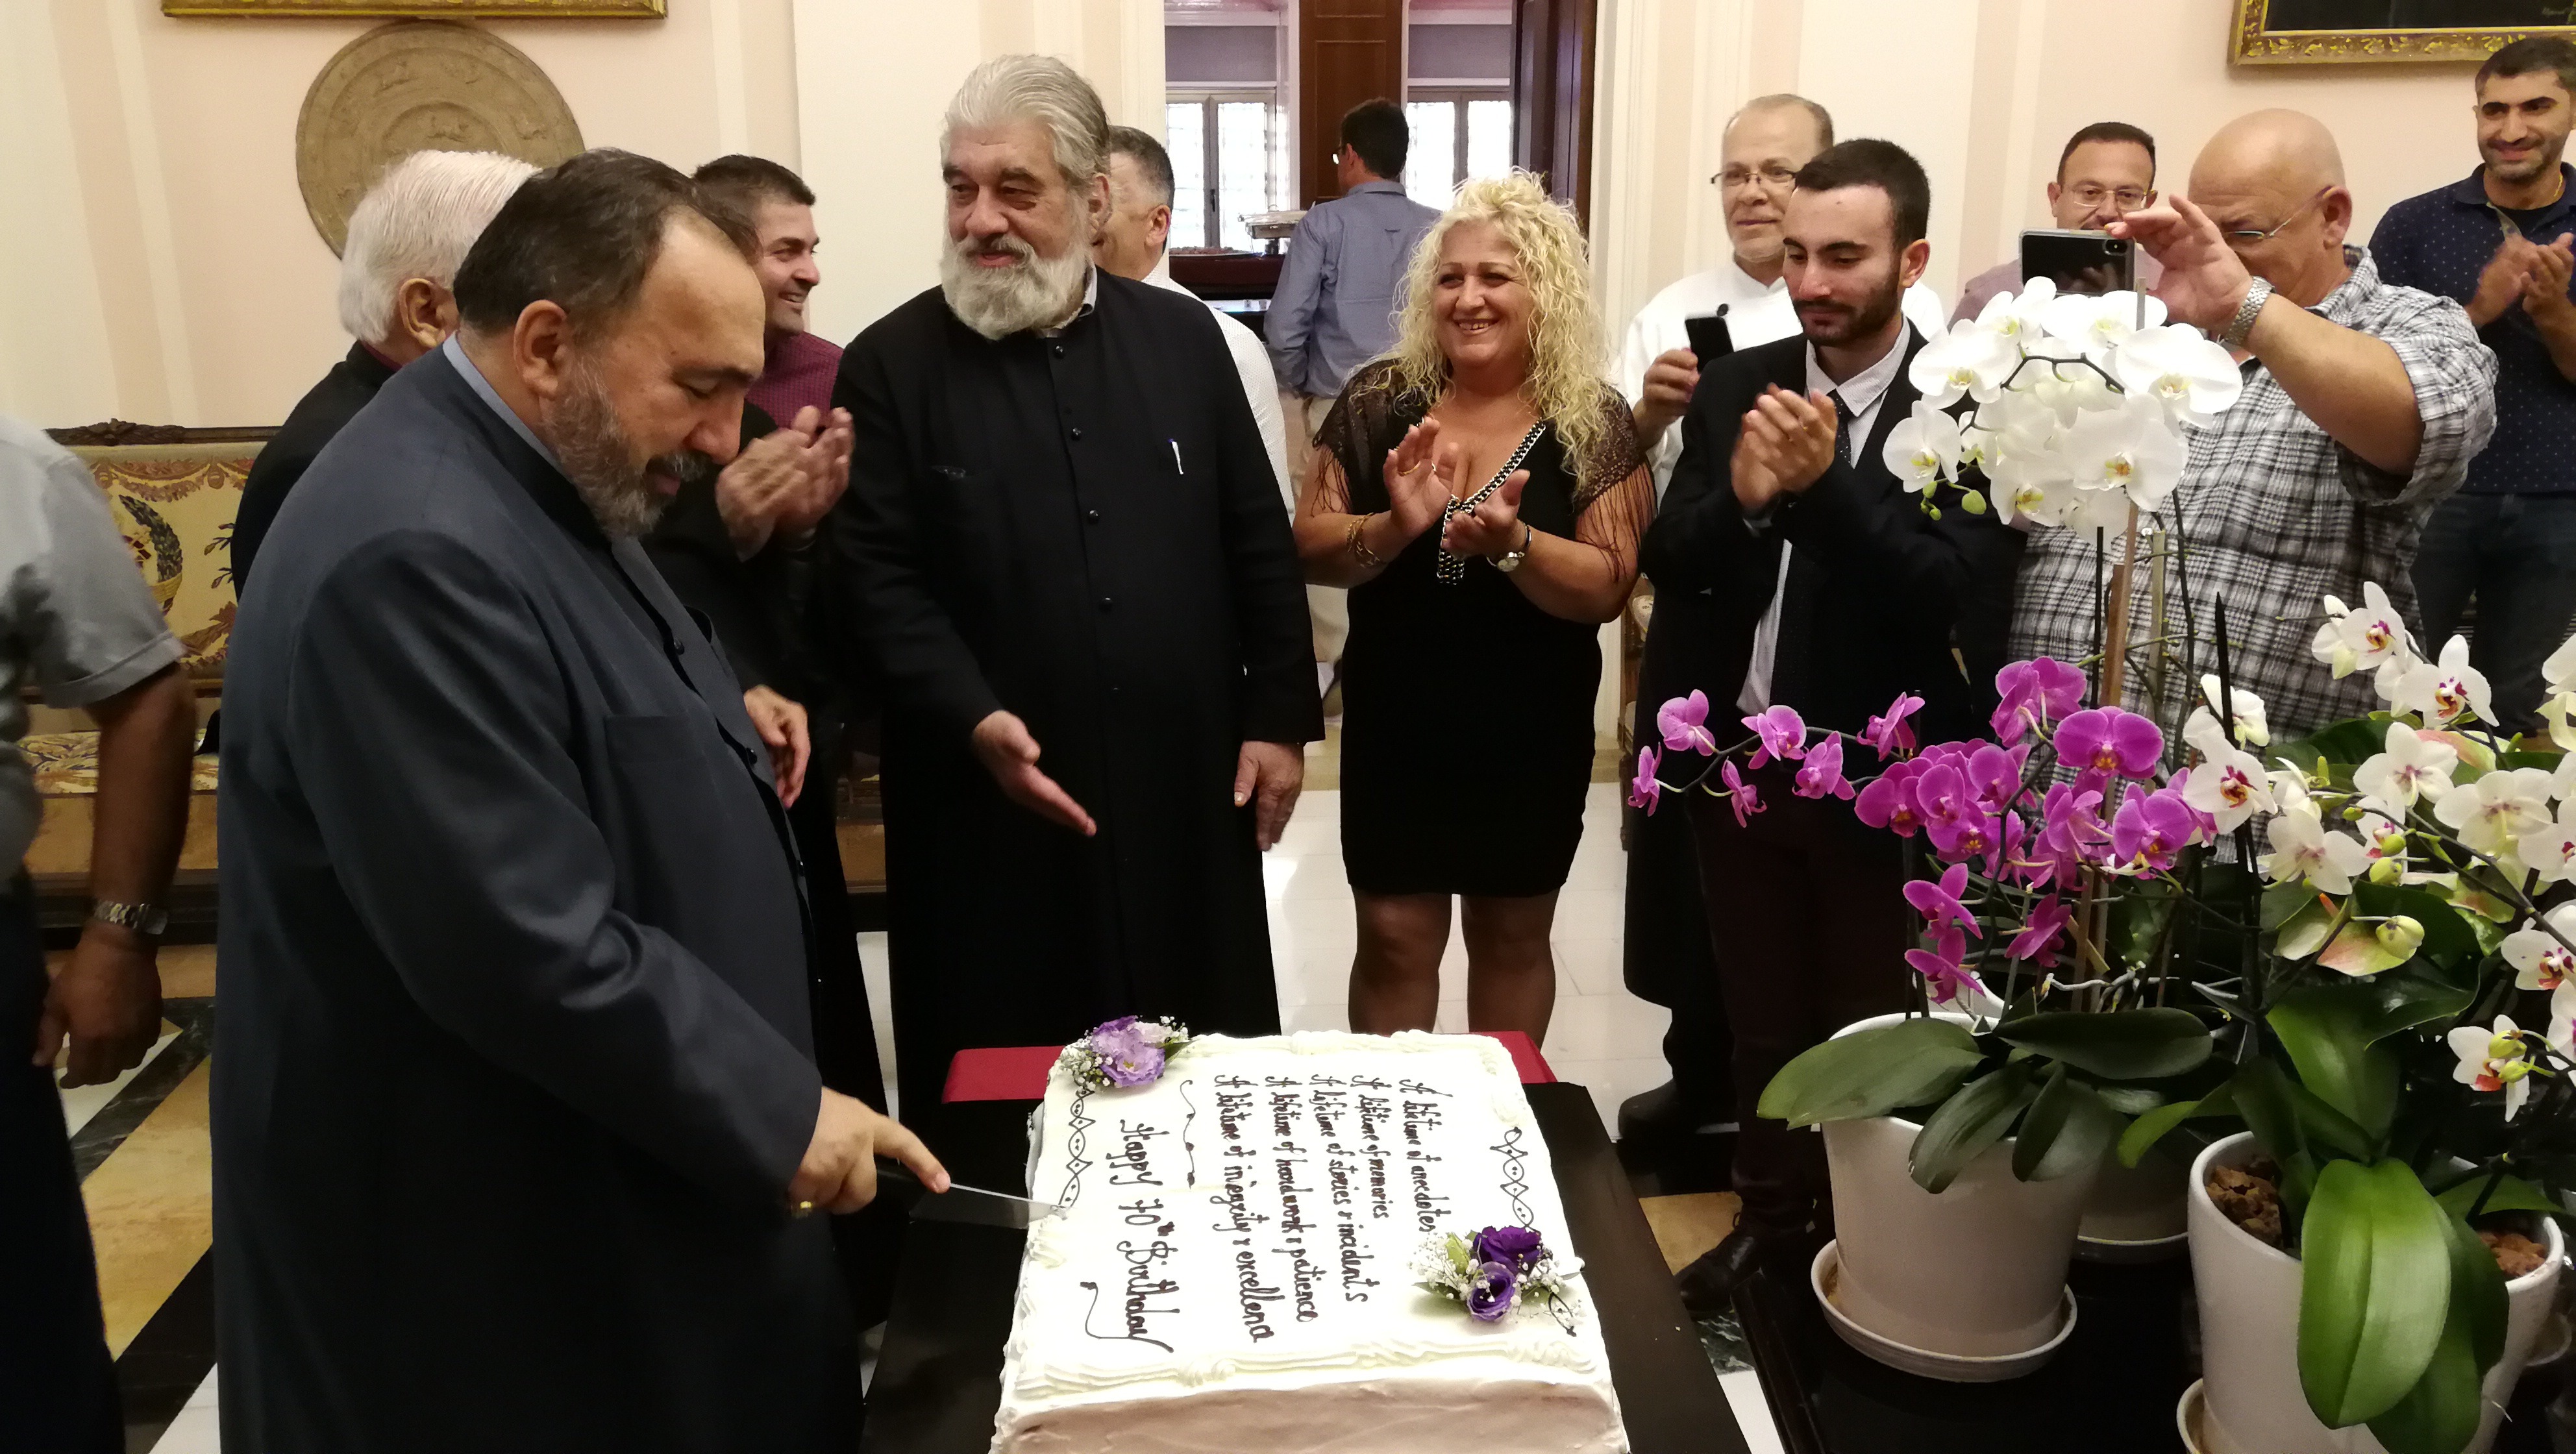 Patriarch-Archbishop Nourhan Manougian of Jerusalem celebrates his 70th Birthday